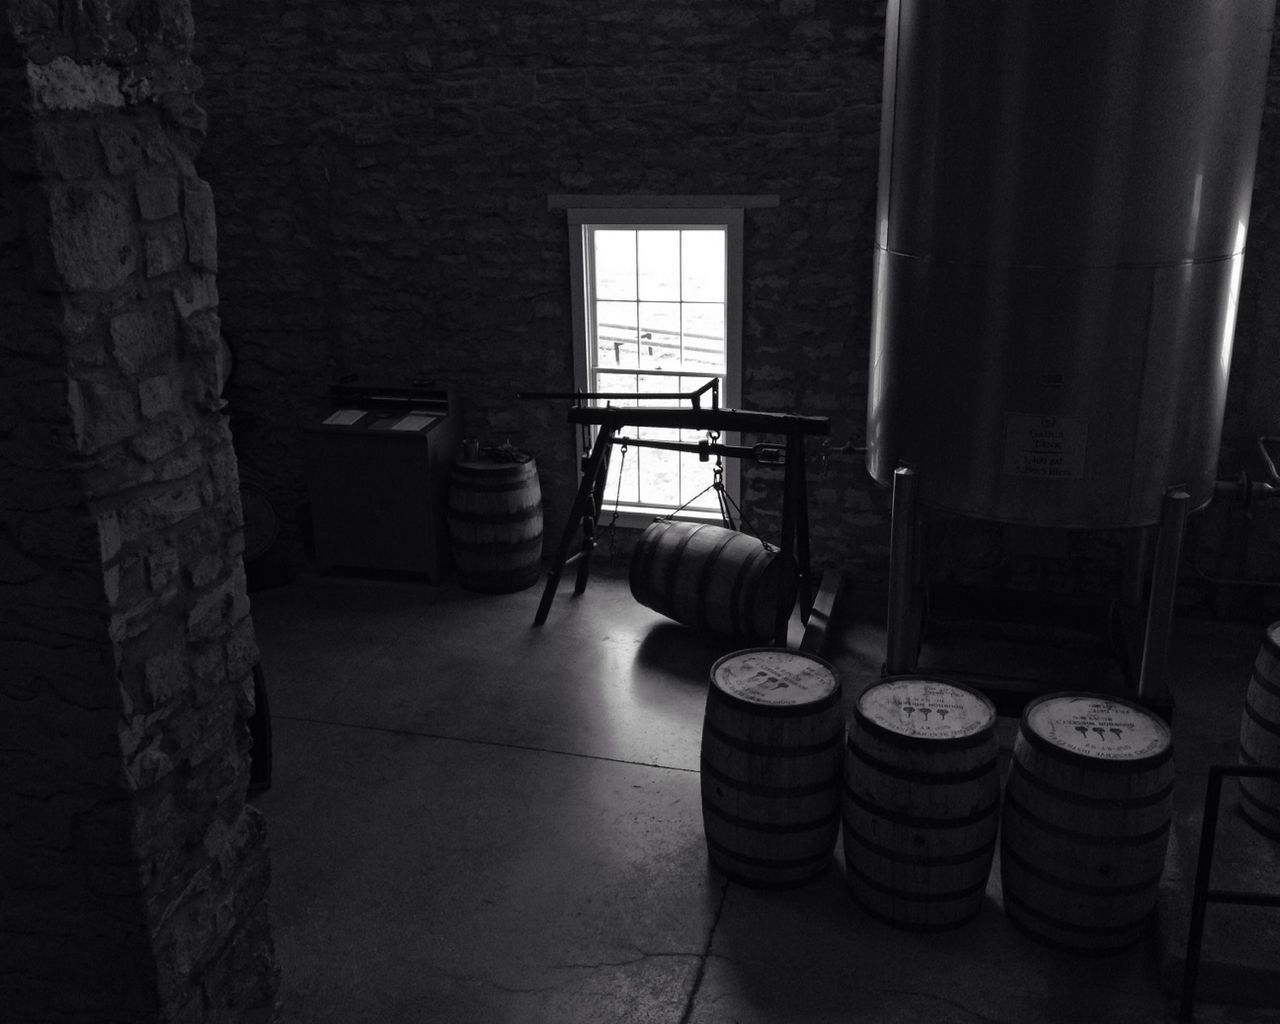 Barrels in warehouse